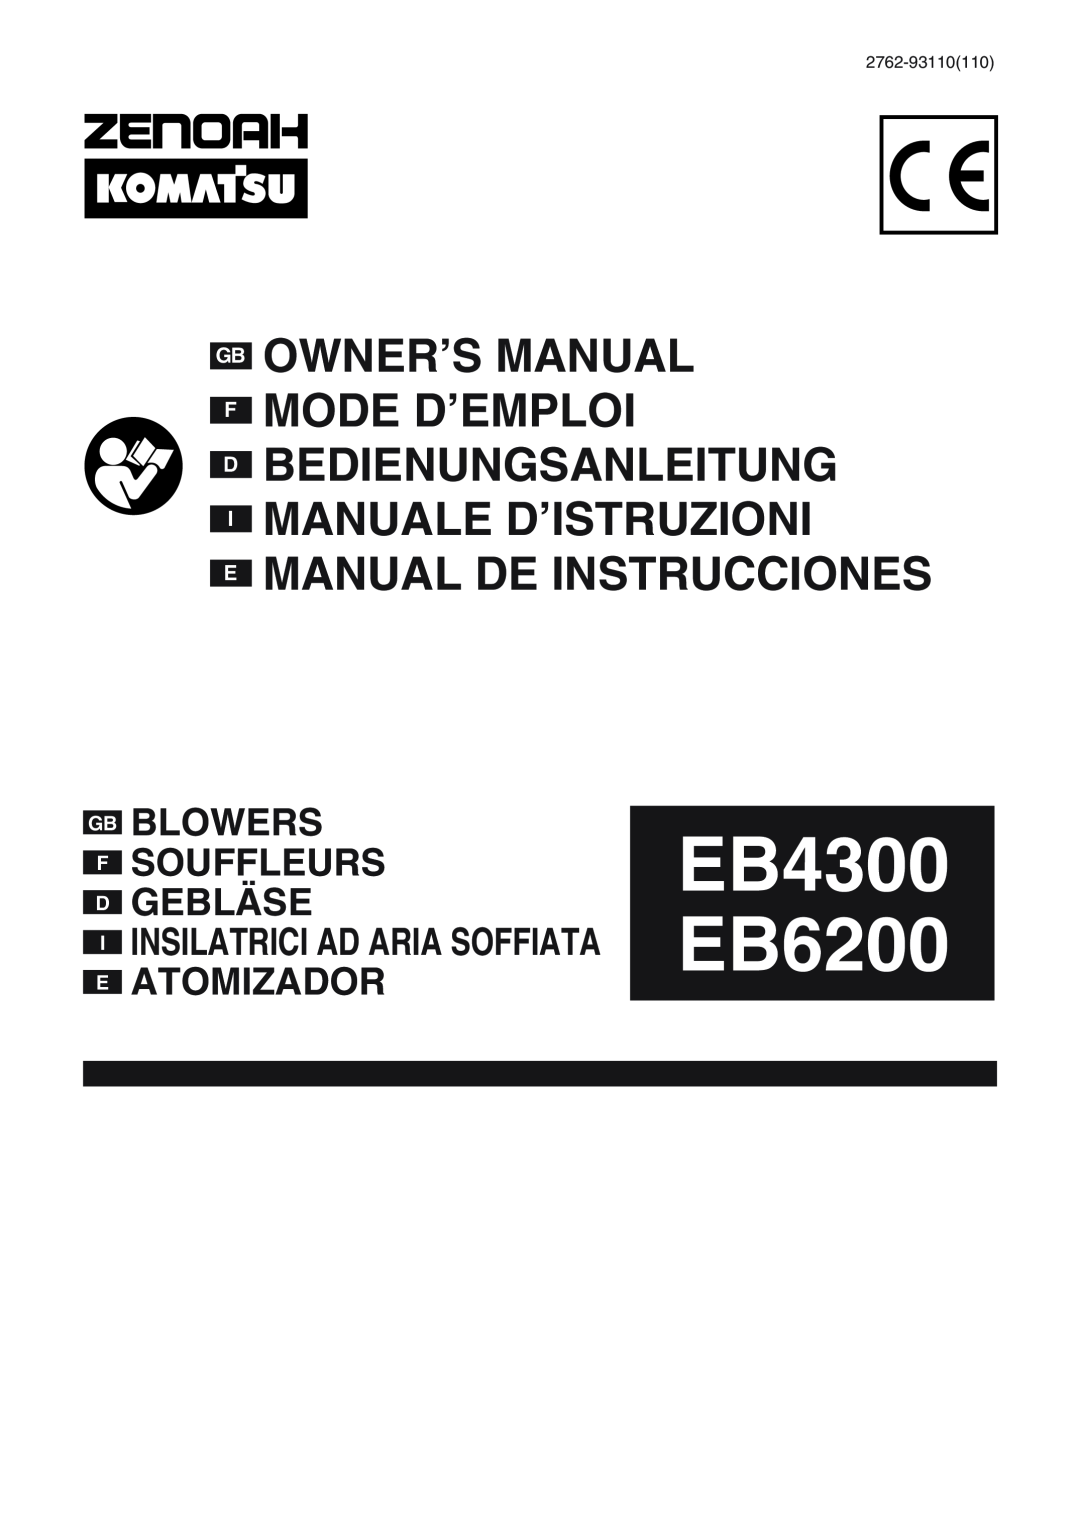 Zenoah owner manual Gb F D I E, EB4300 EB6200, Gb Blowers Fsouffleurs D Gebläse 